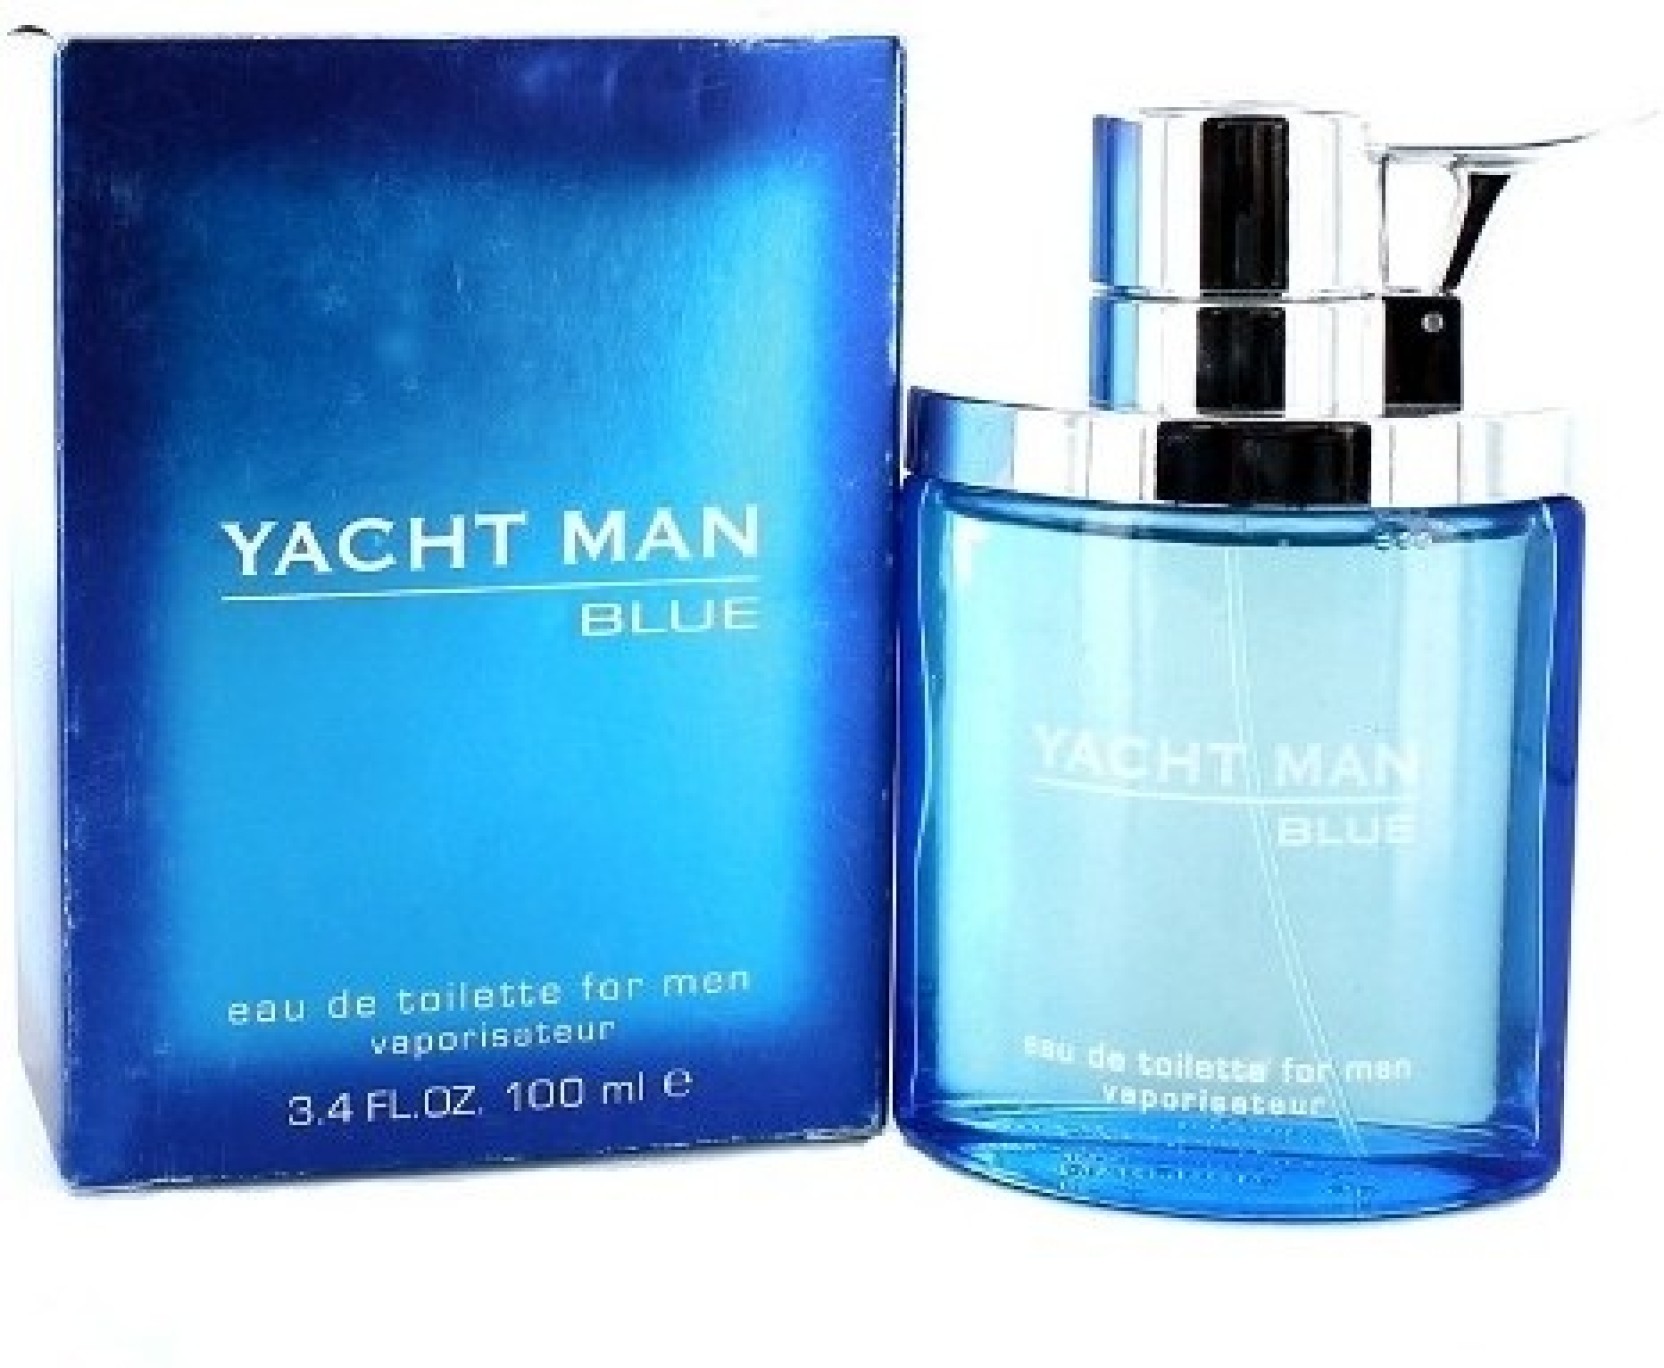 yacht man blue perfume price in pakistan